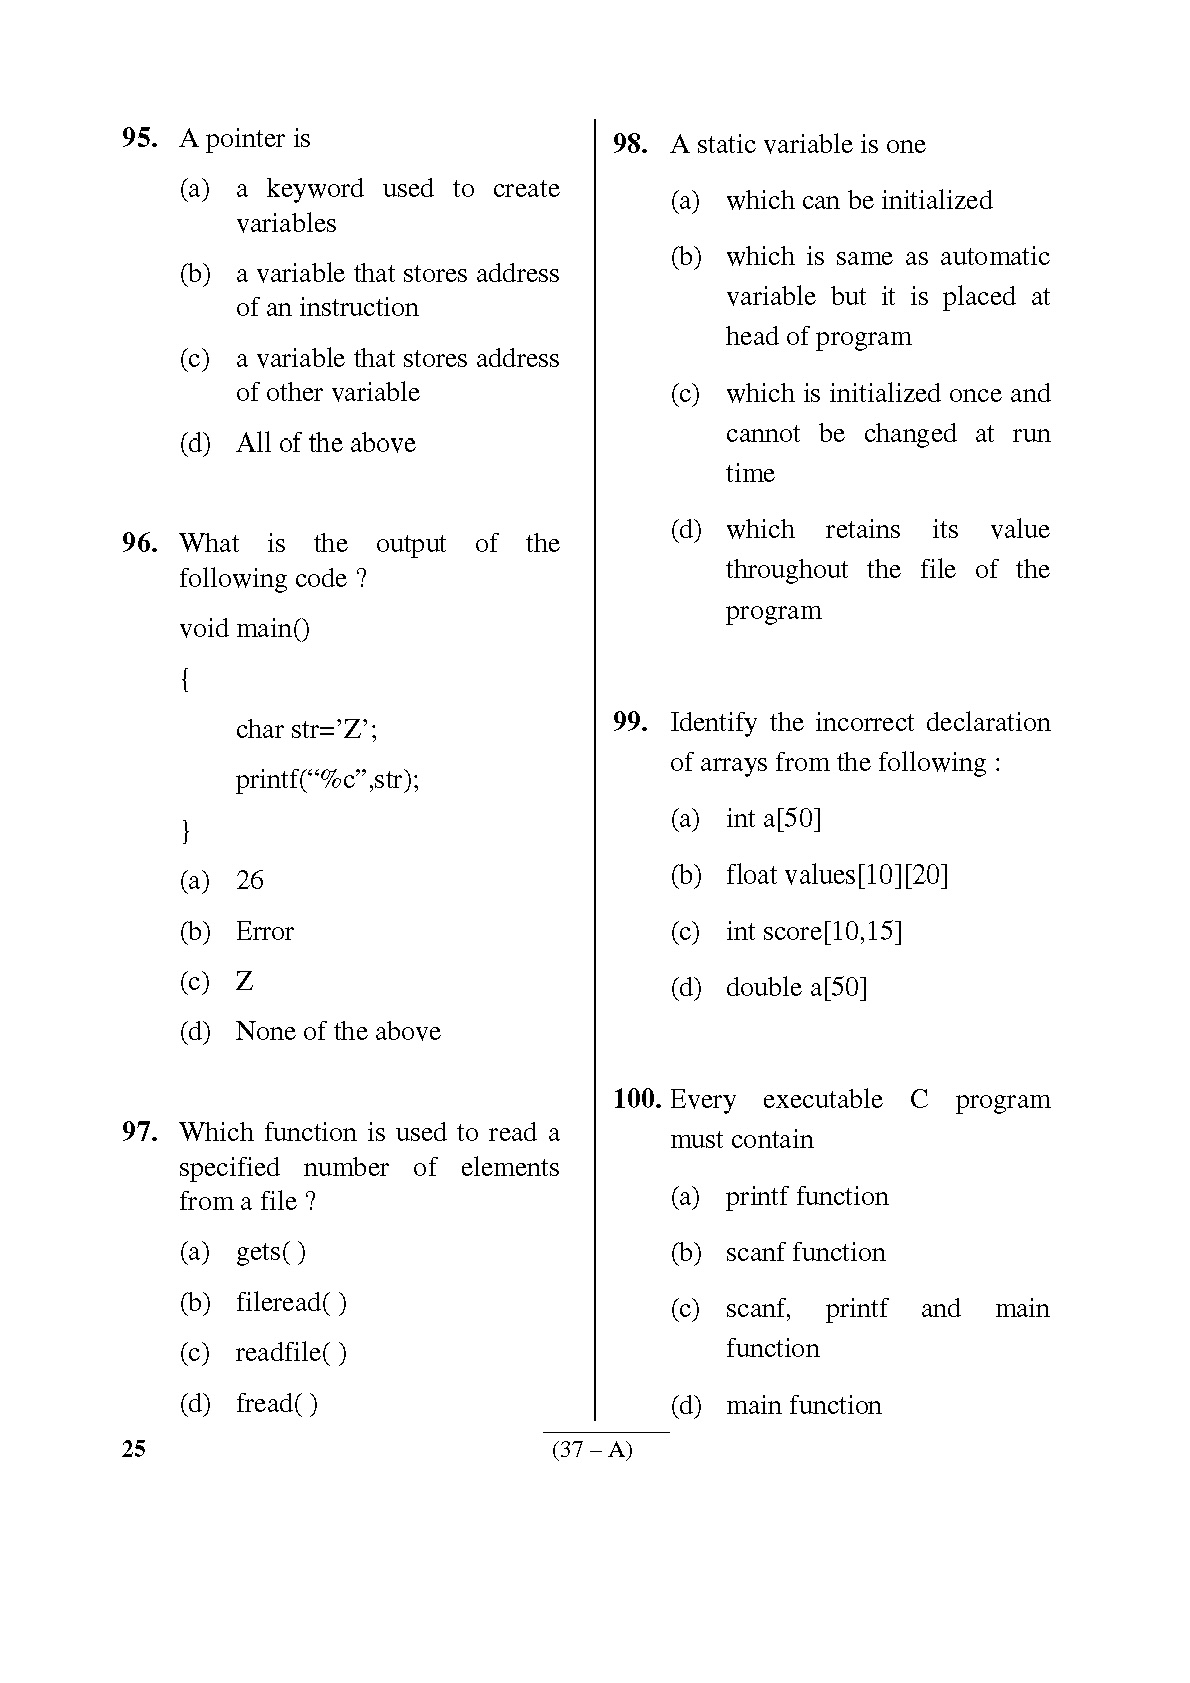 Karnataka PSC Computer Science Teachers Exam Sample Question Paper Subject code 25 37